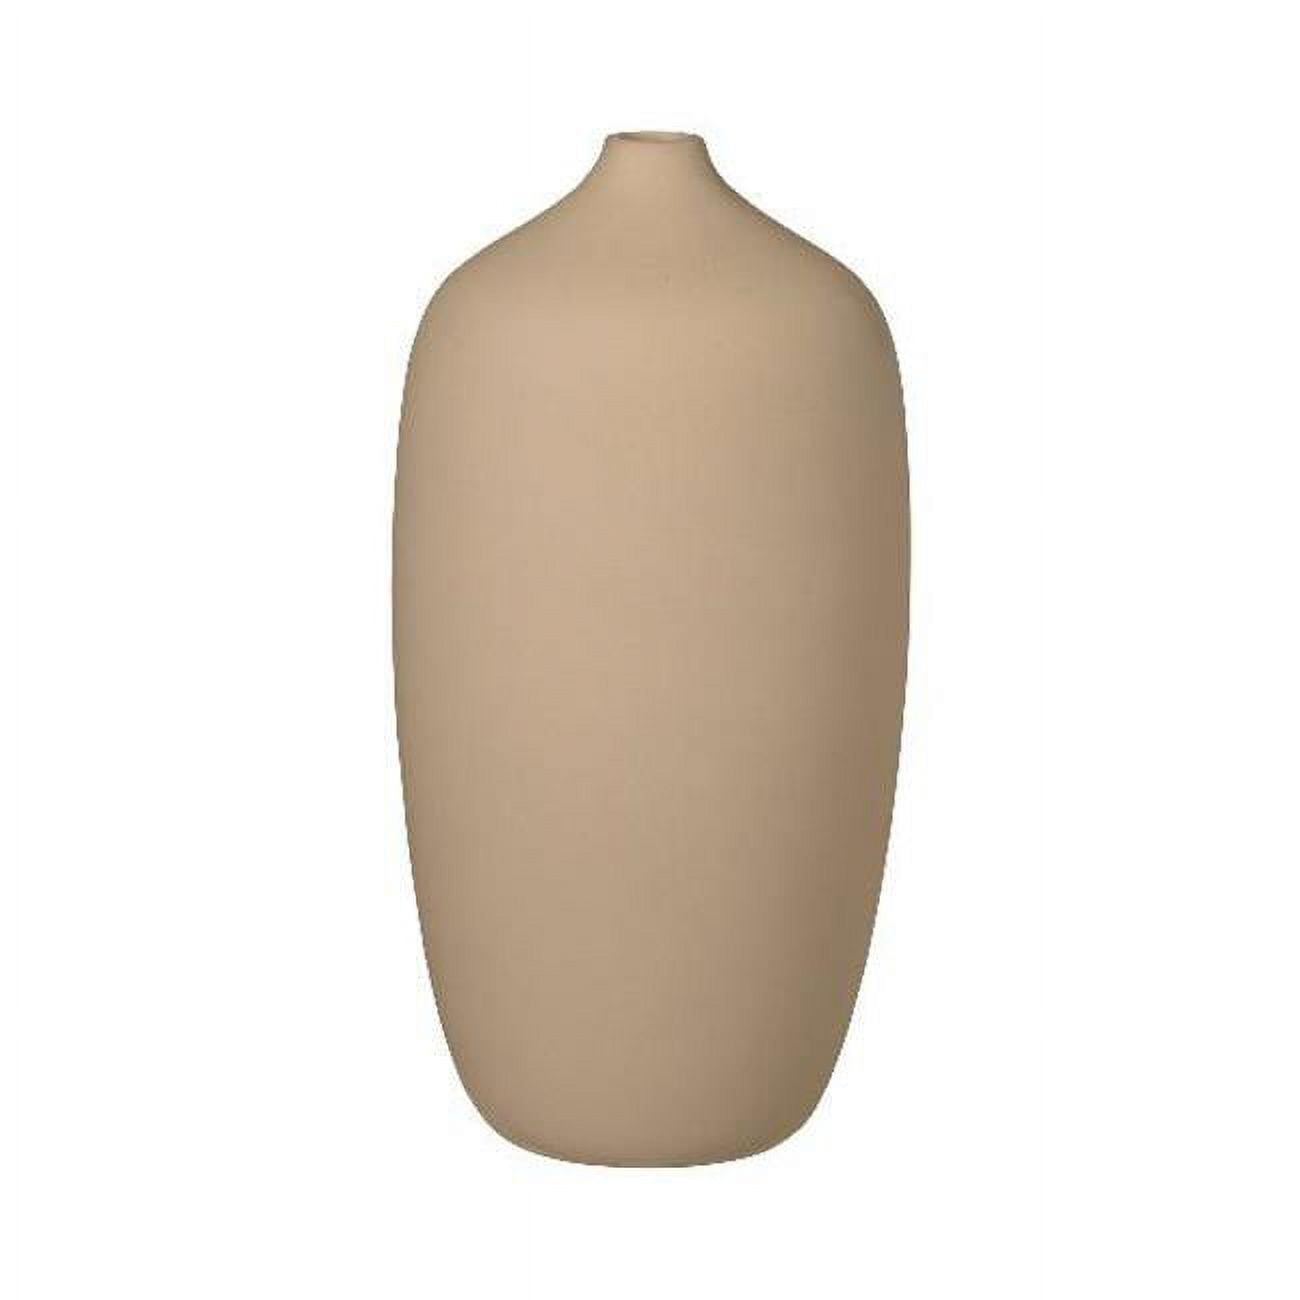 Picture of Blomus 66173 5 x 10 in. Ceola Ceramic Vase, Nomad